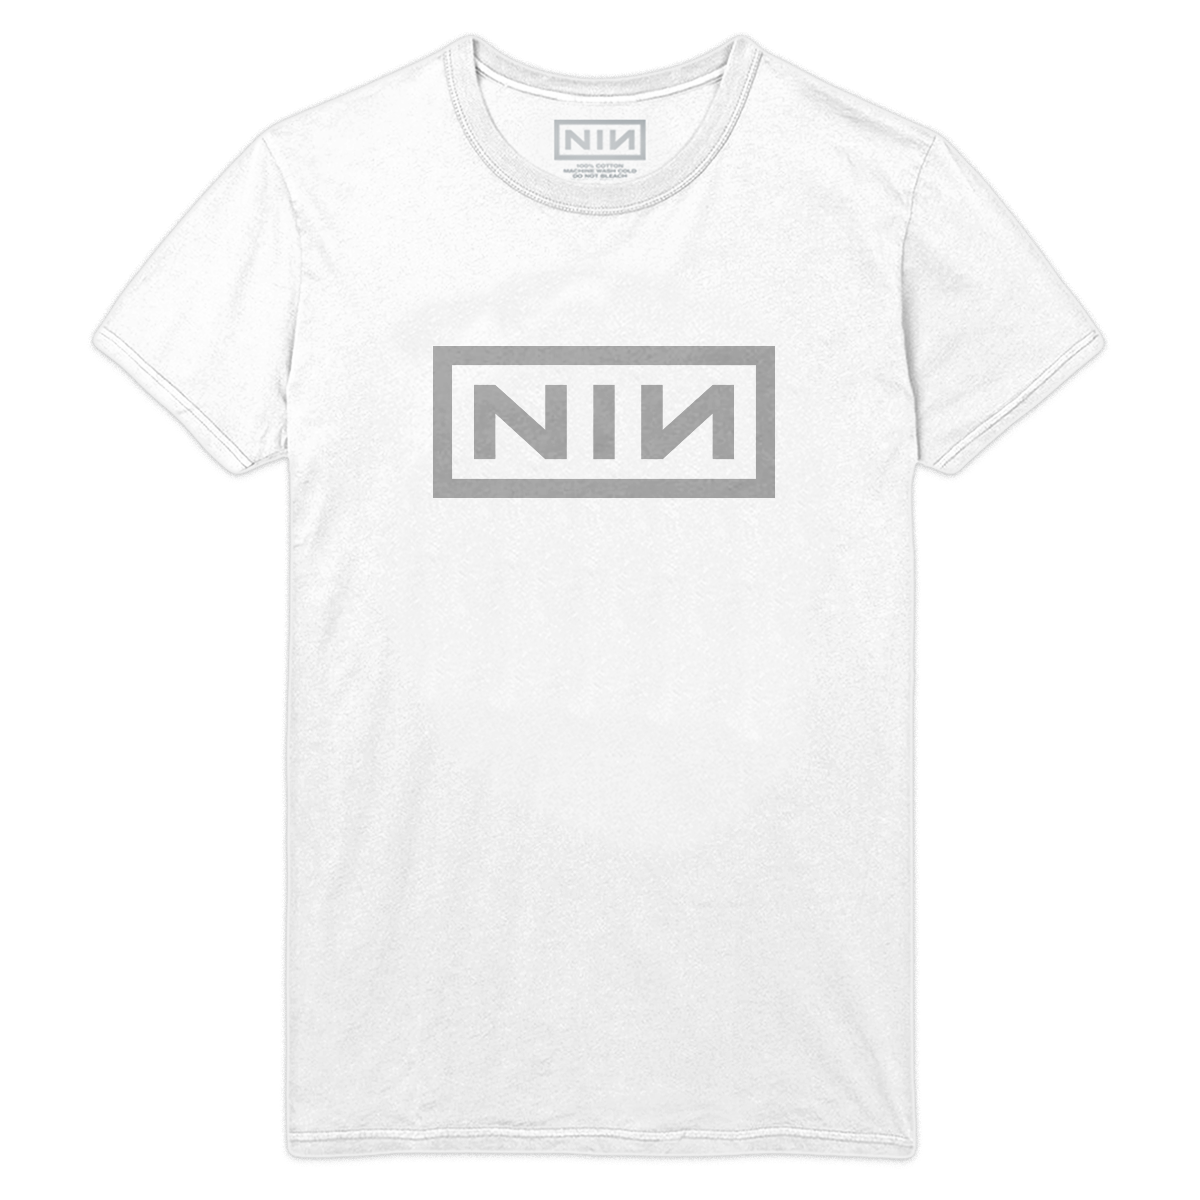 Nine Inch Nails Logo T-Shirt – NIИ T-Shirt – White